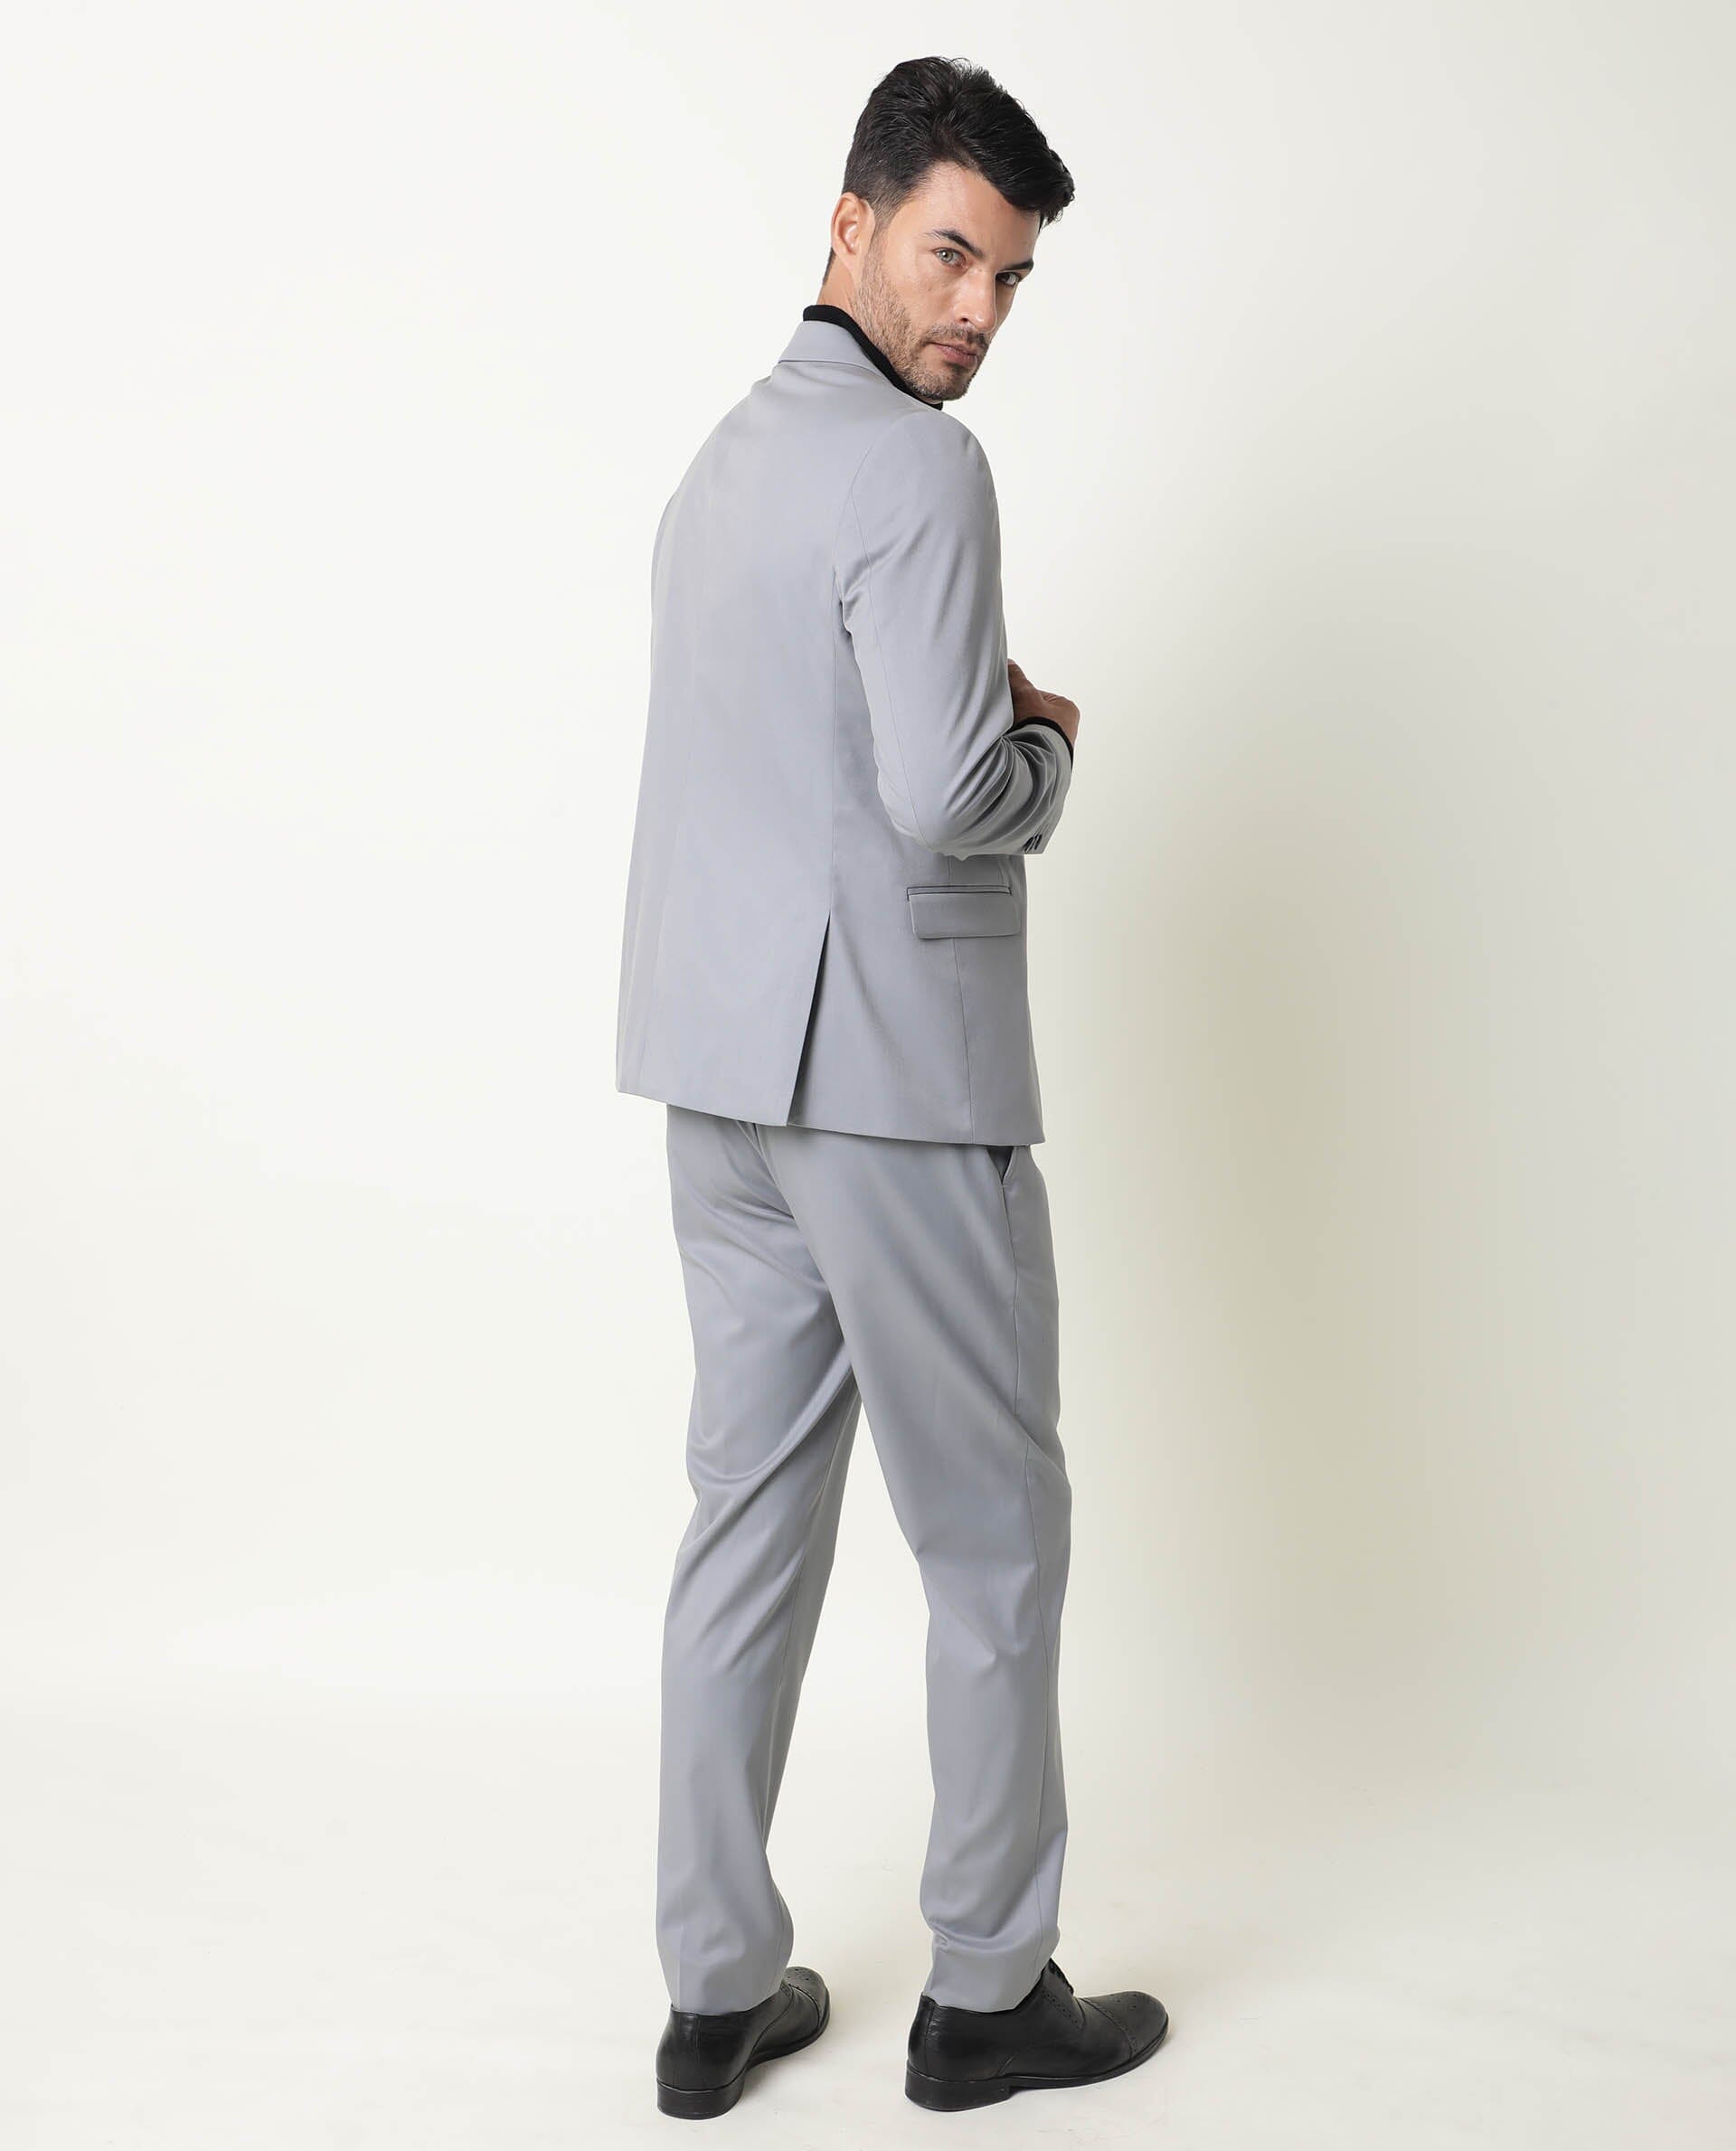 Slim Fit Suit trousers  Dark grey  Men  HM IN